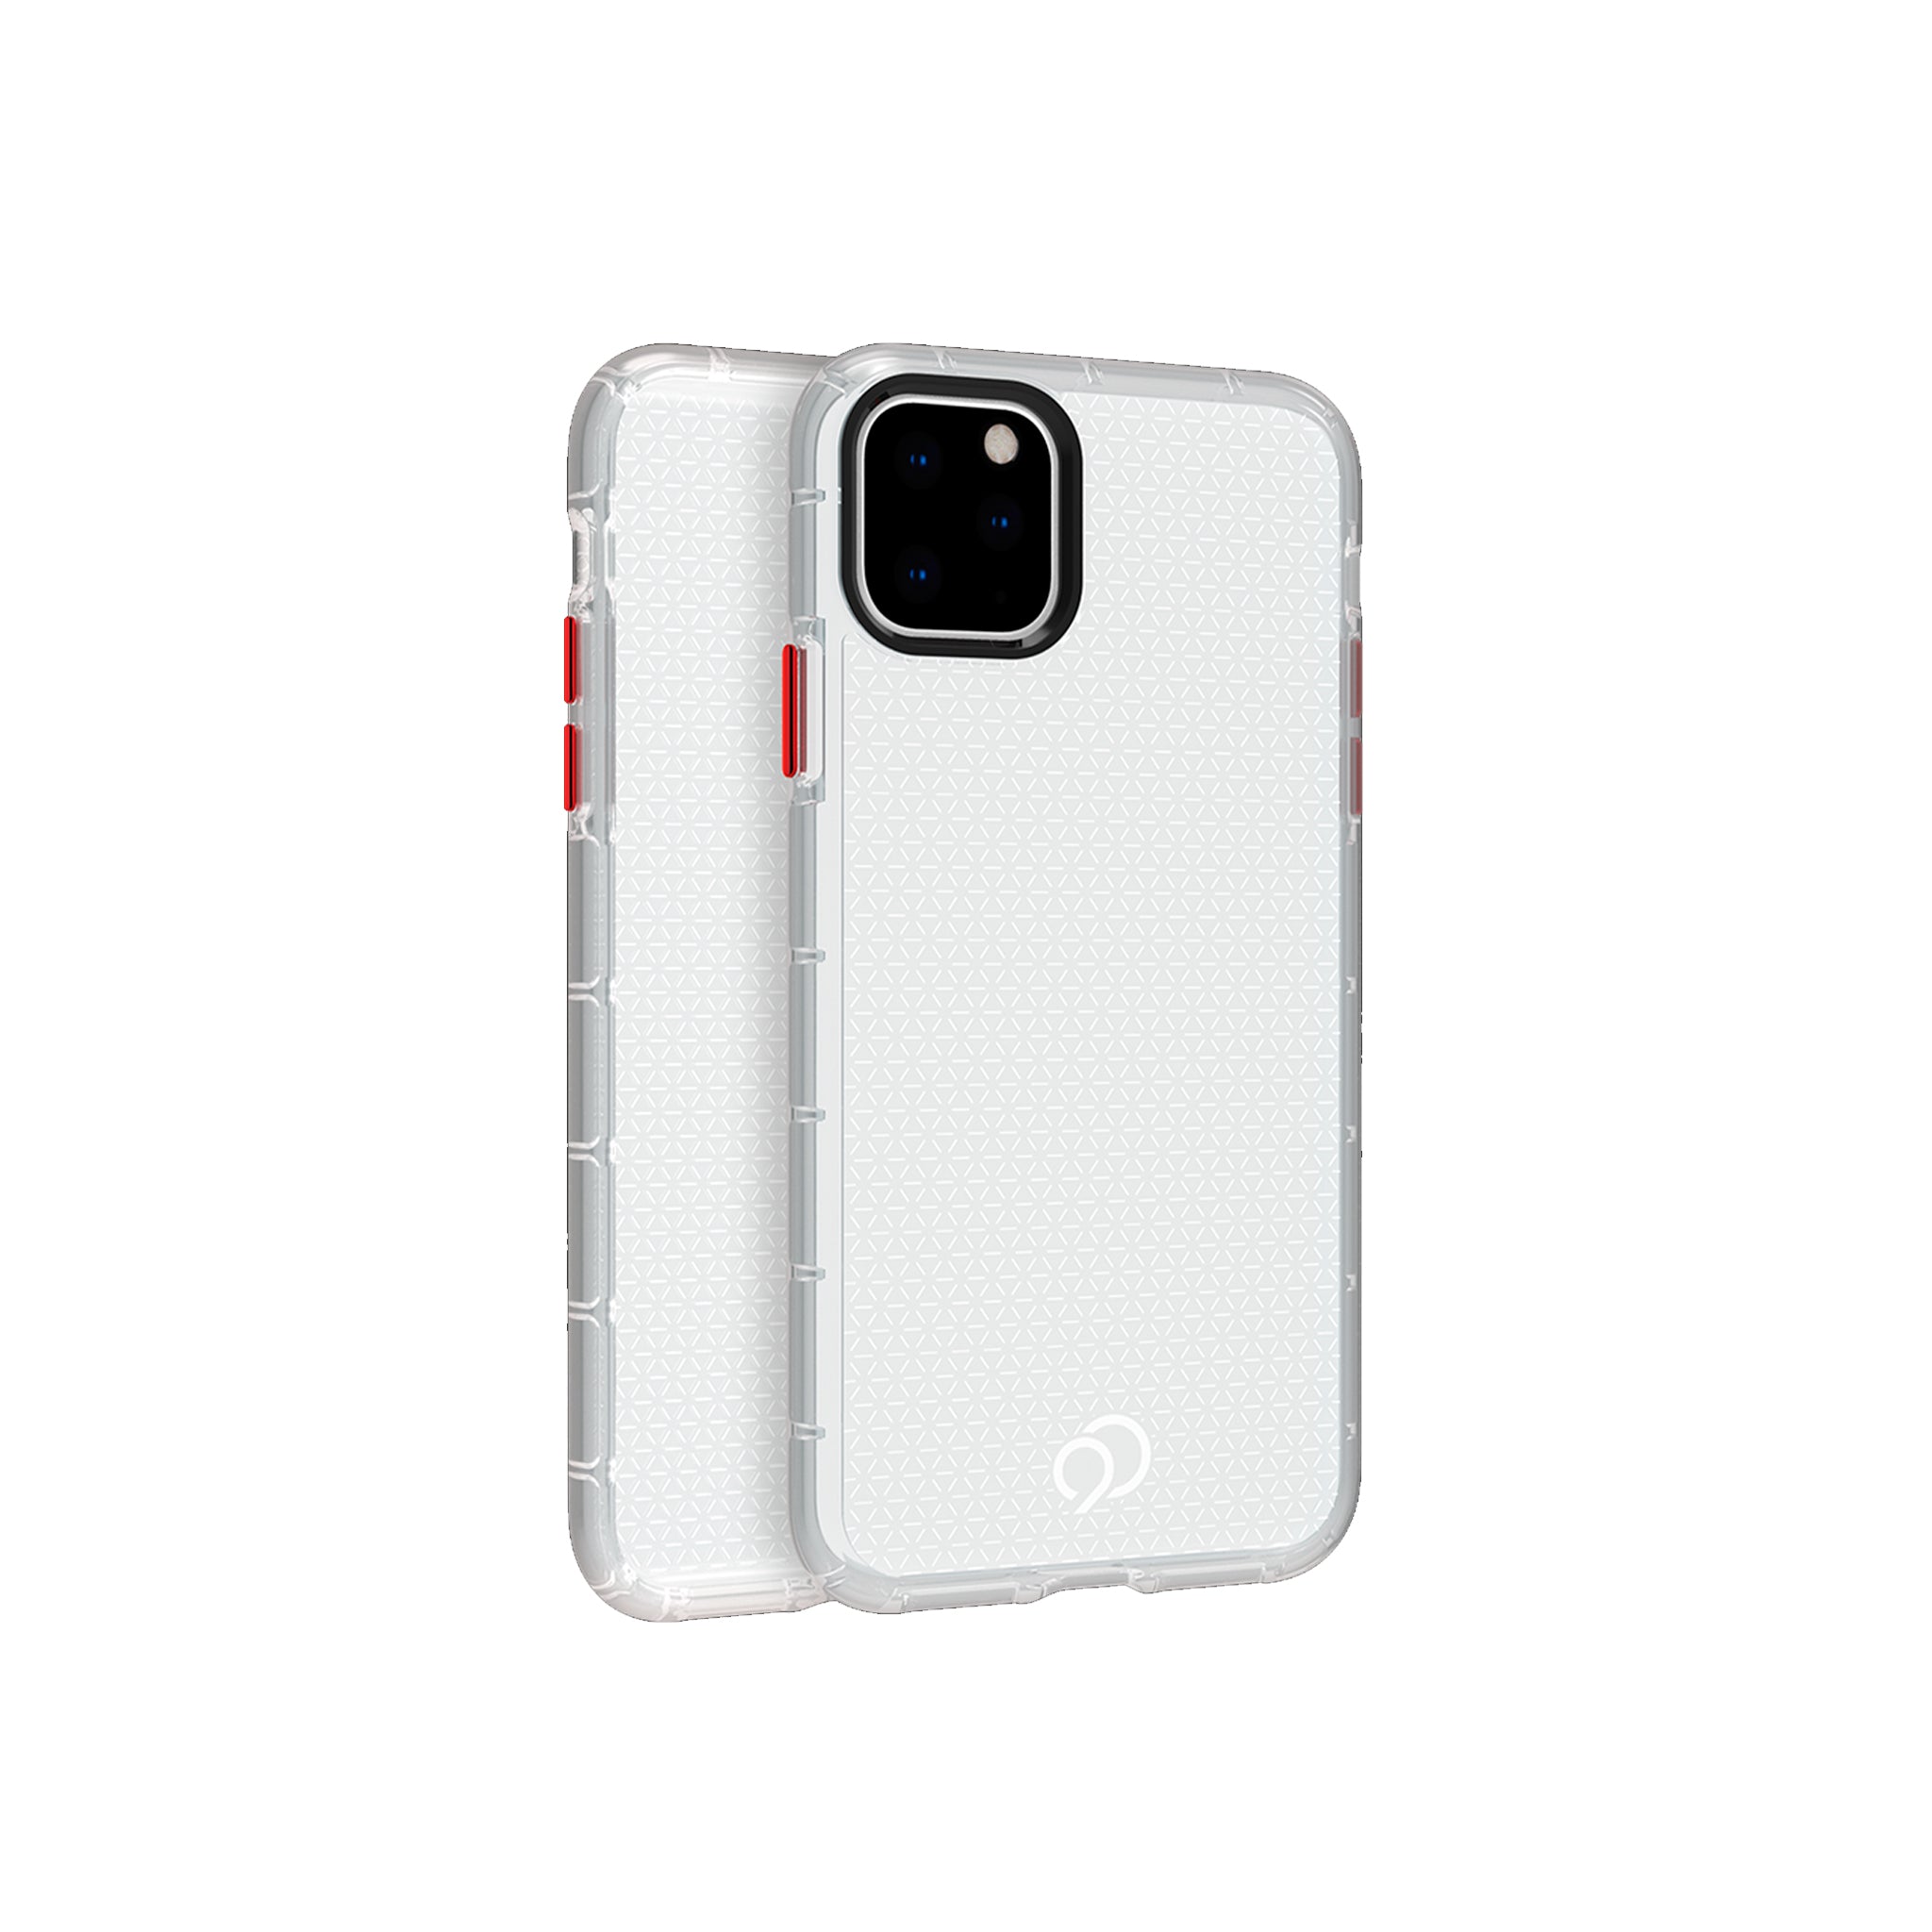 Nimbus9 - Phantom 2 Case For Apple Iphone 11 Pro Max - Clear